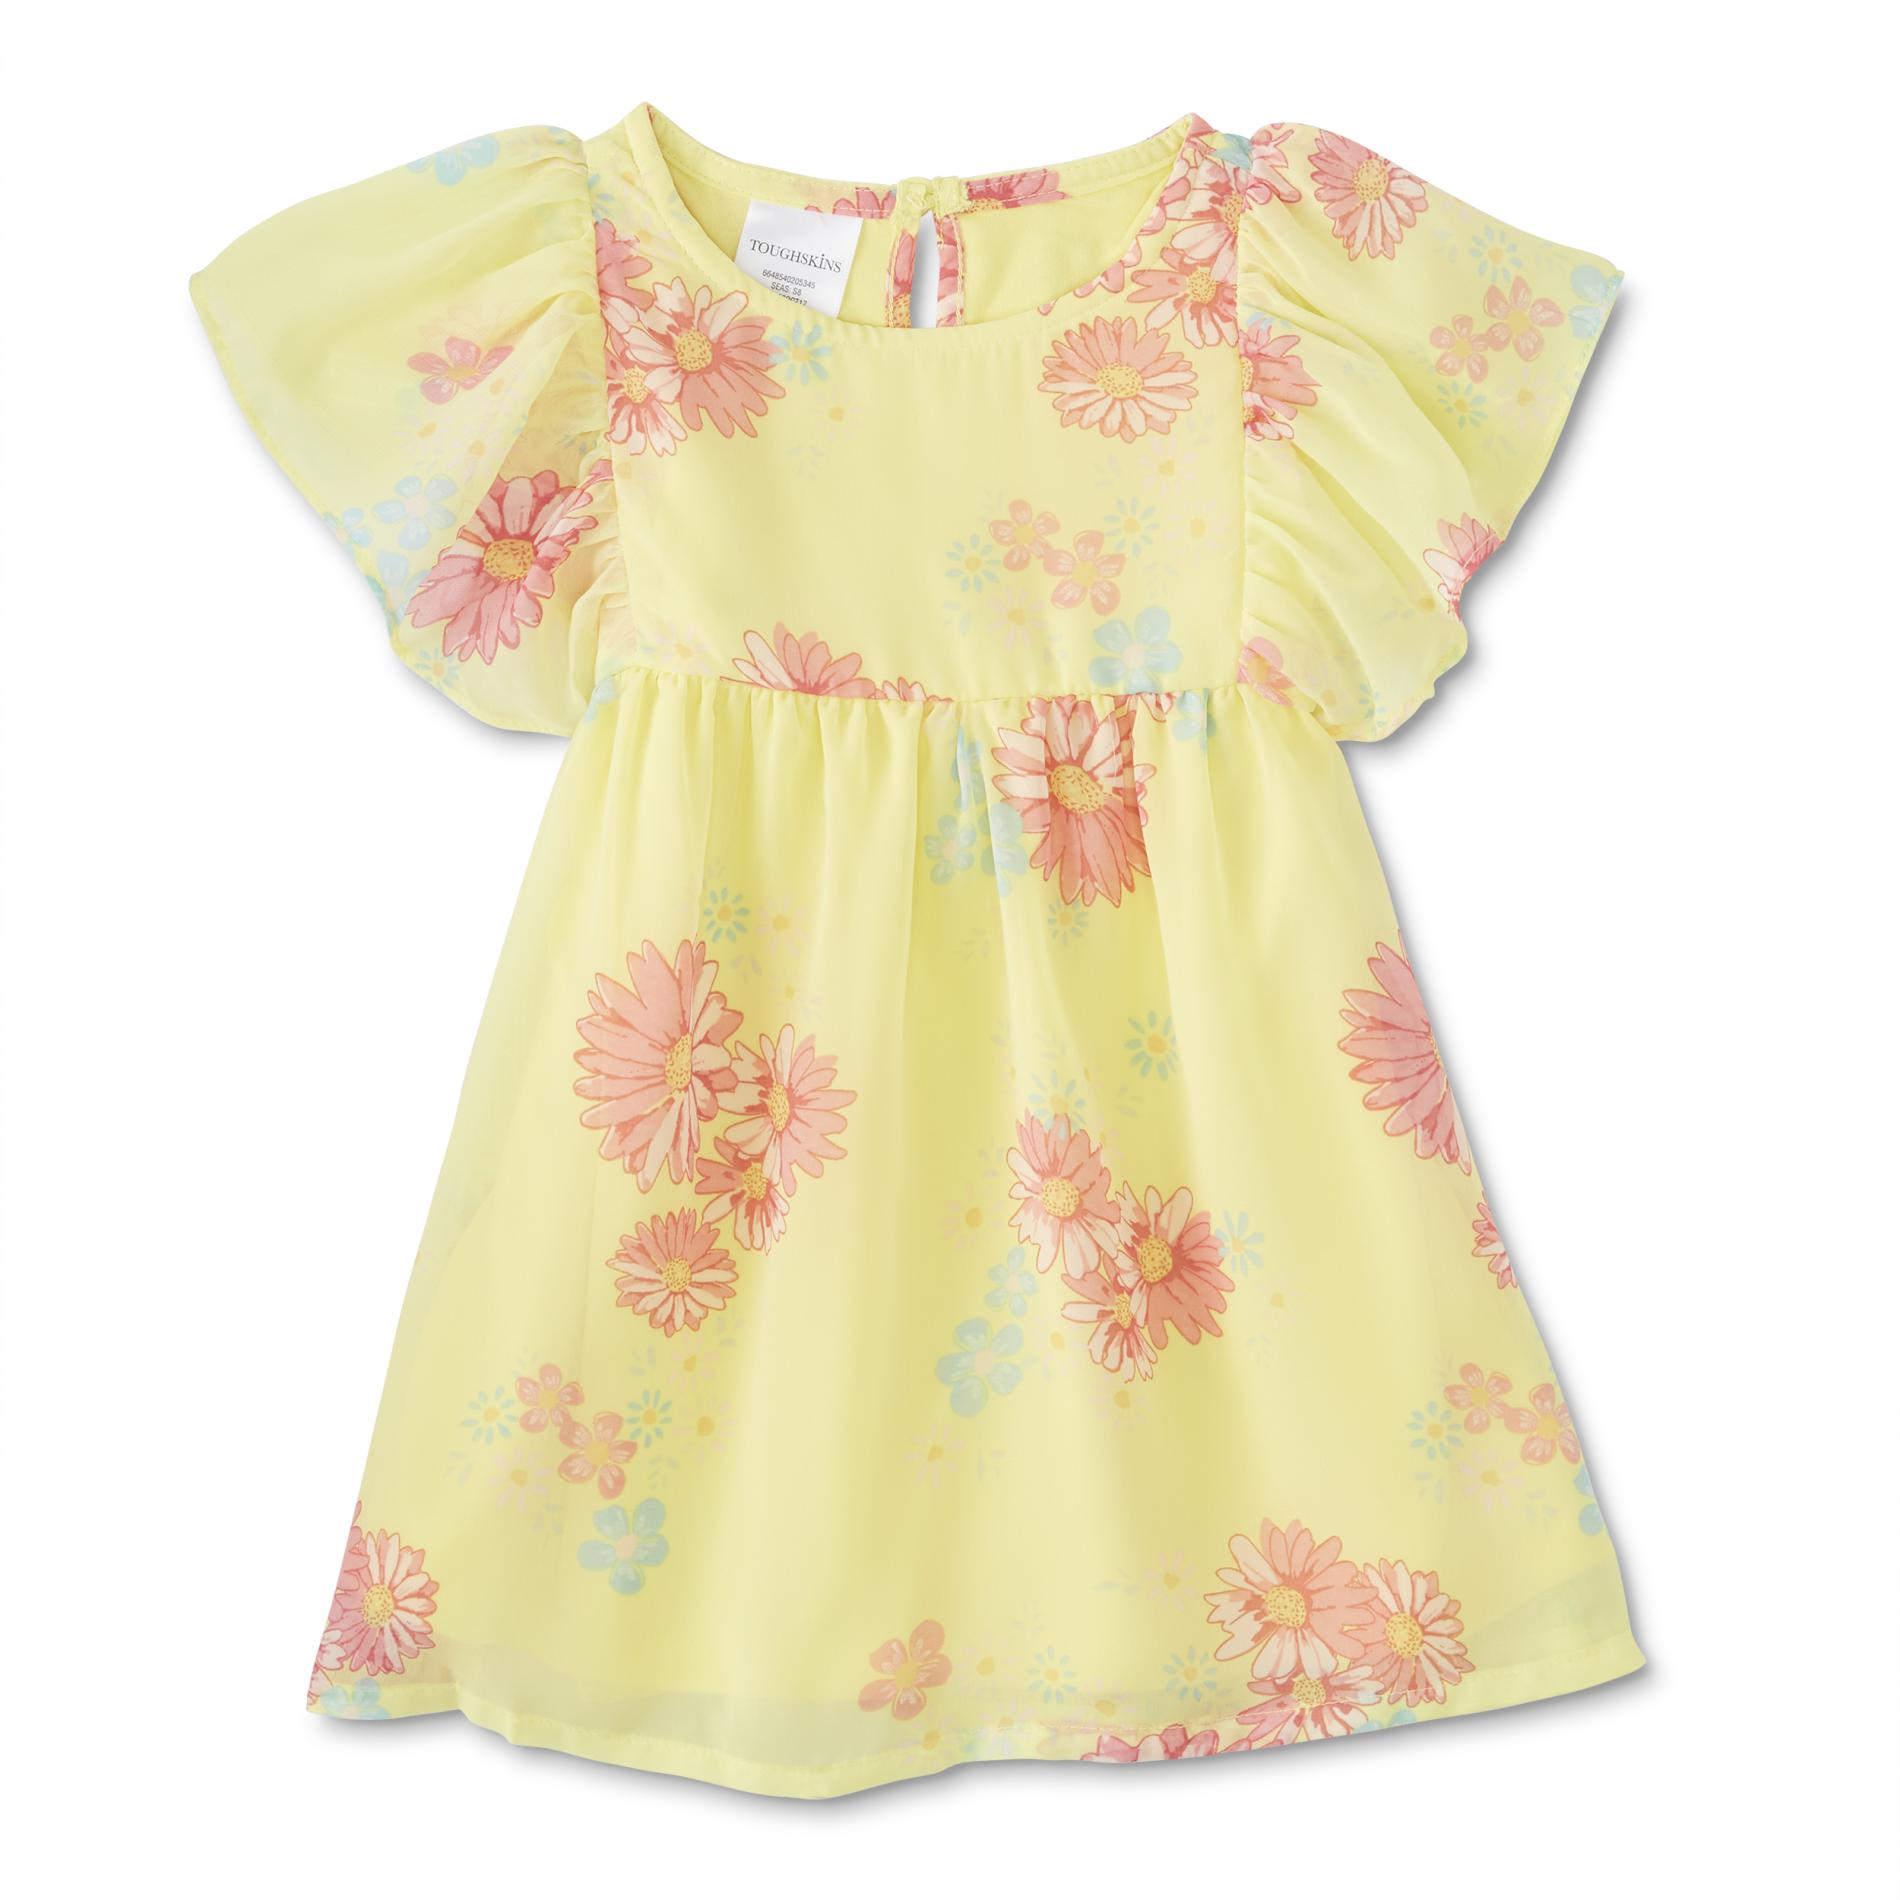 Toughskins Infant & Toddler Girls' Occasion Dress - Floral